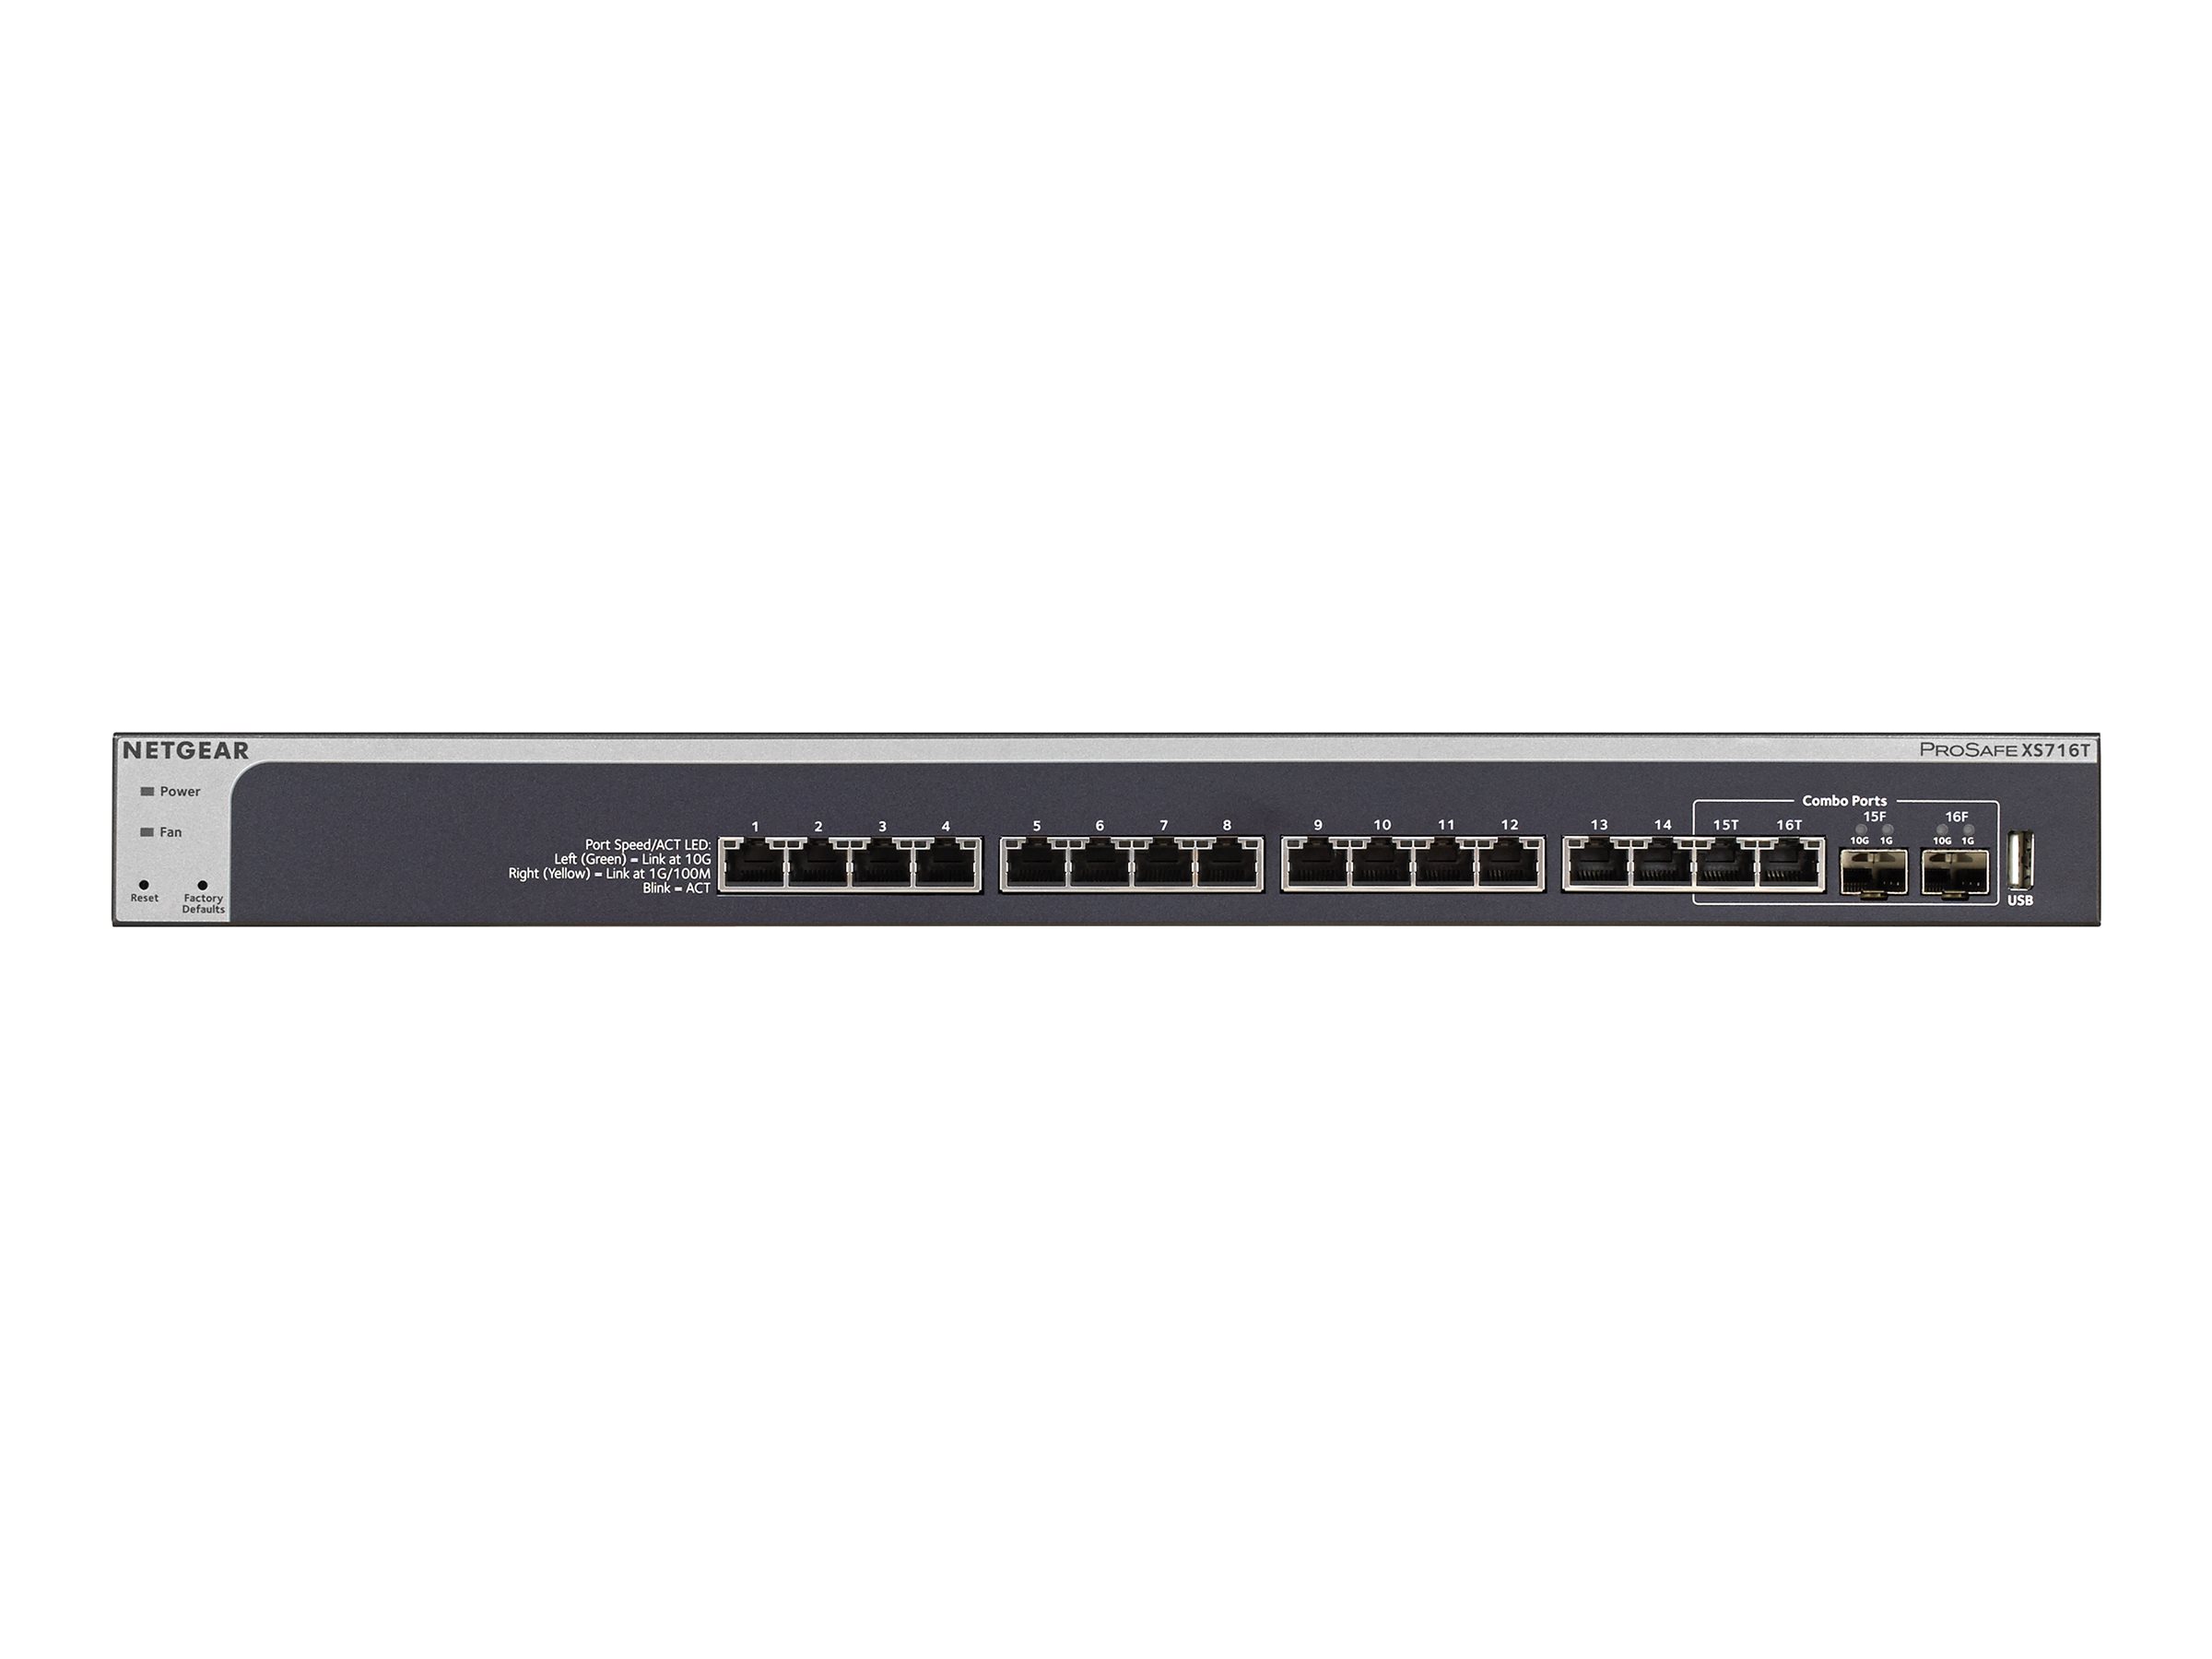 NETGEAR ProSAFE XS716T - switch - 16 ports - smart - rack-mountable - image 2 of 4